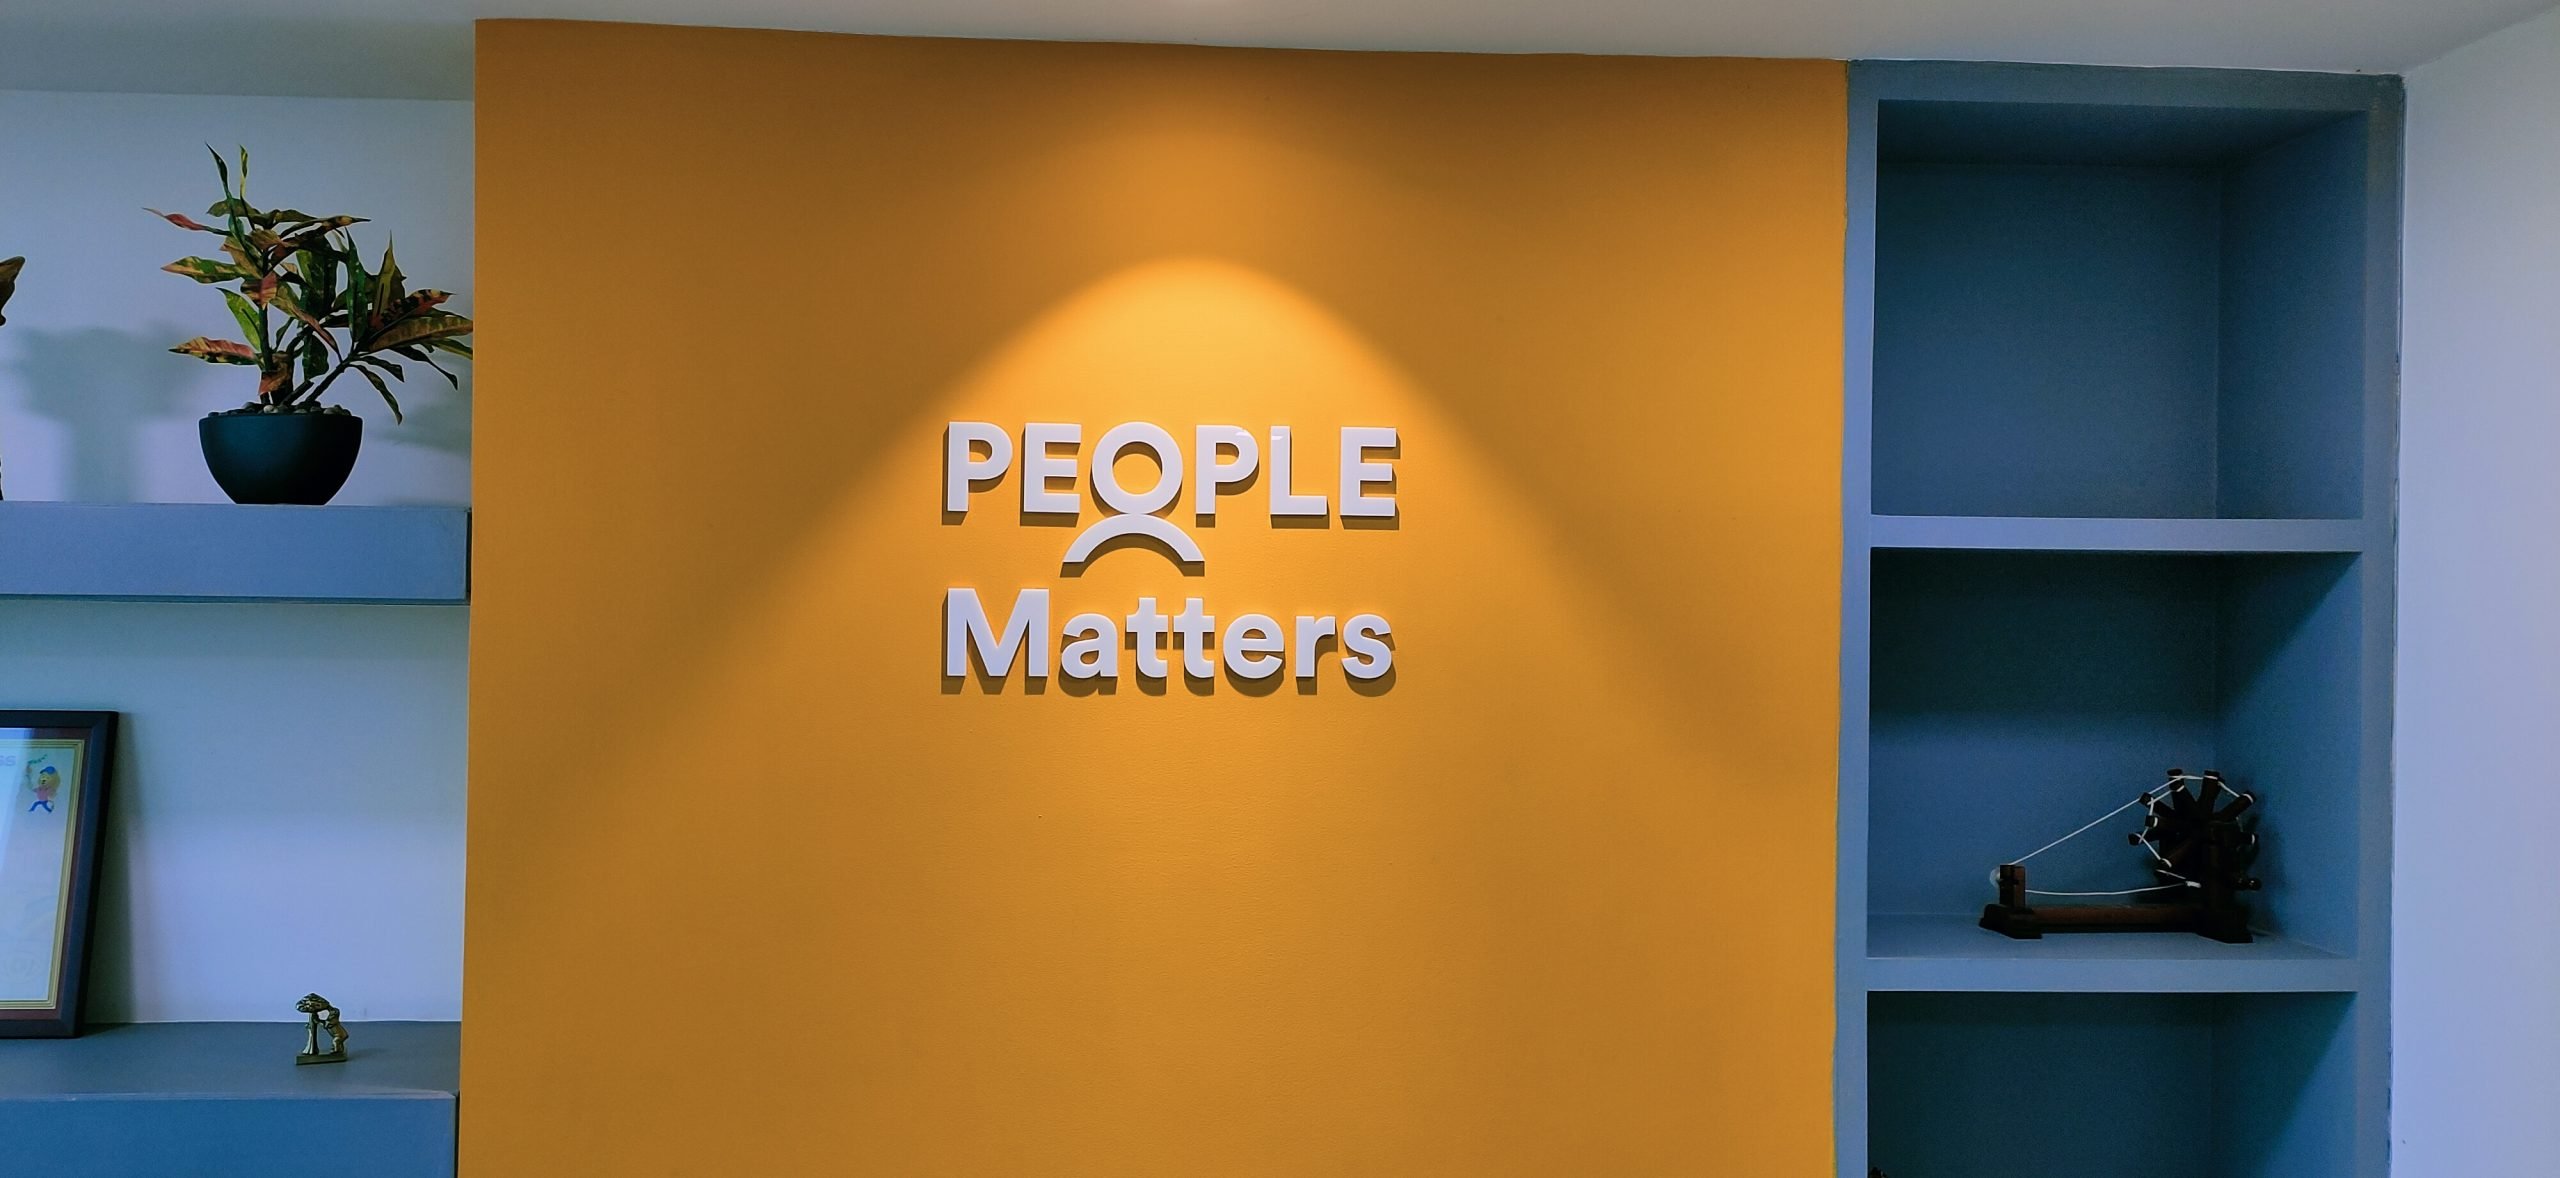 People Matter’s